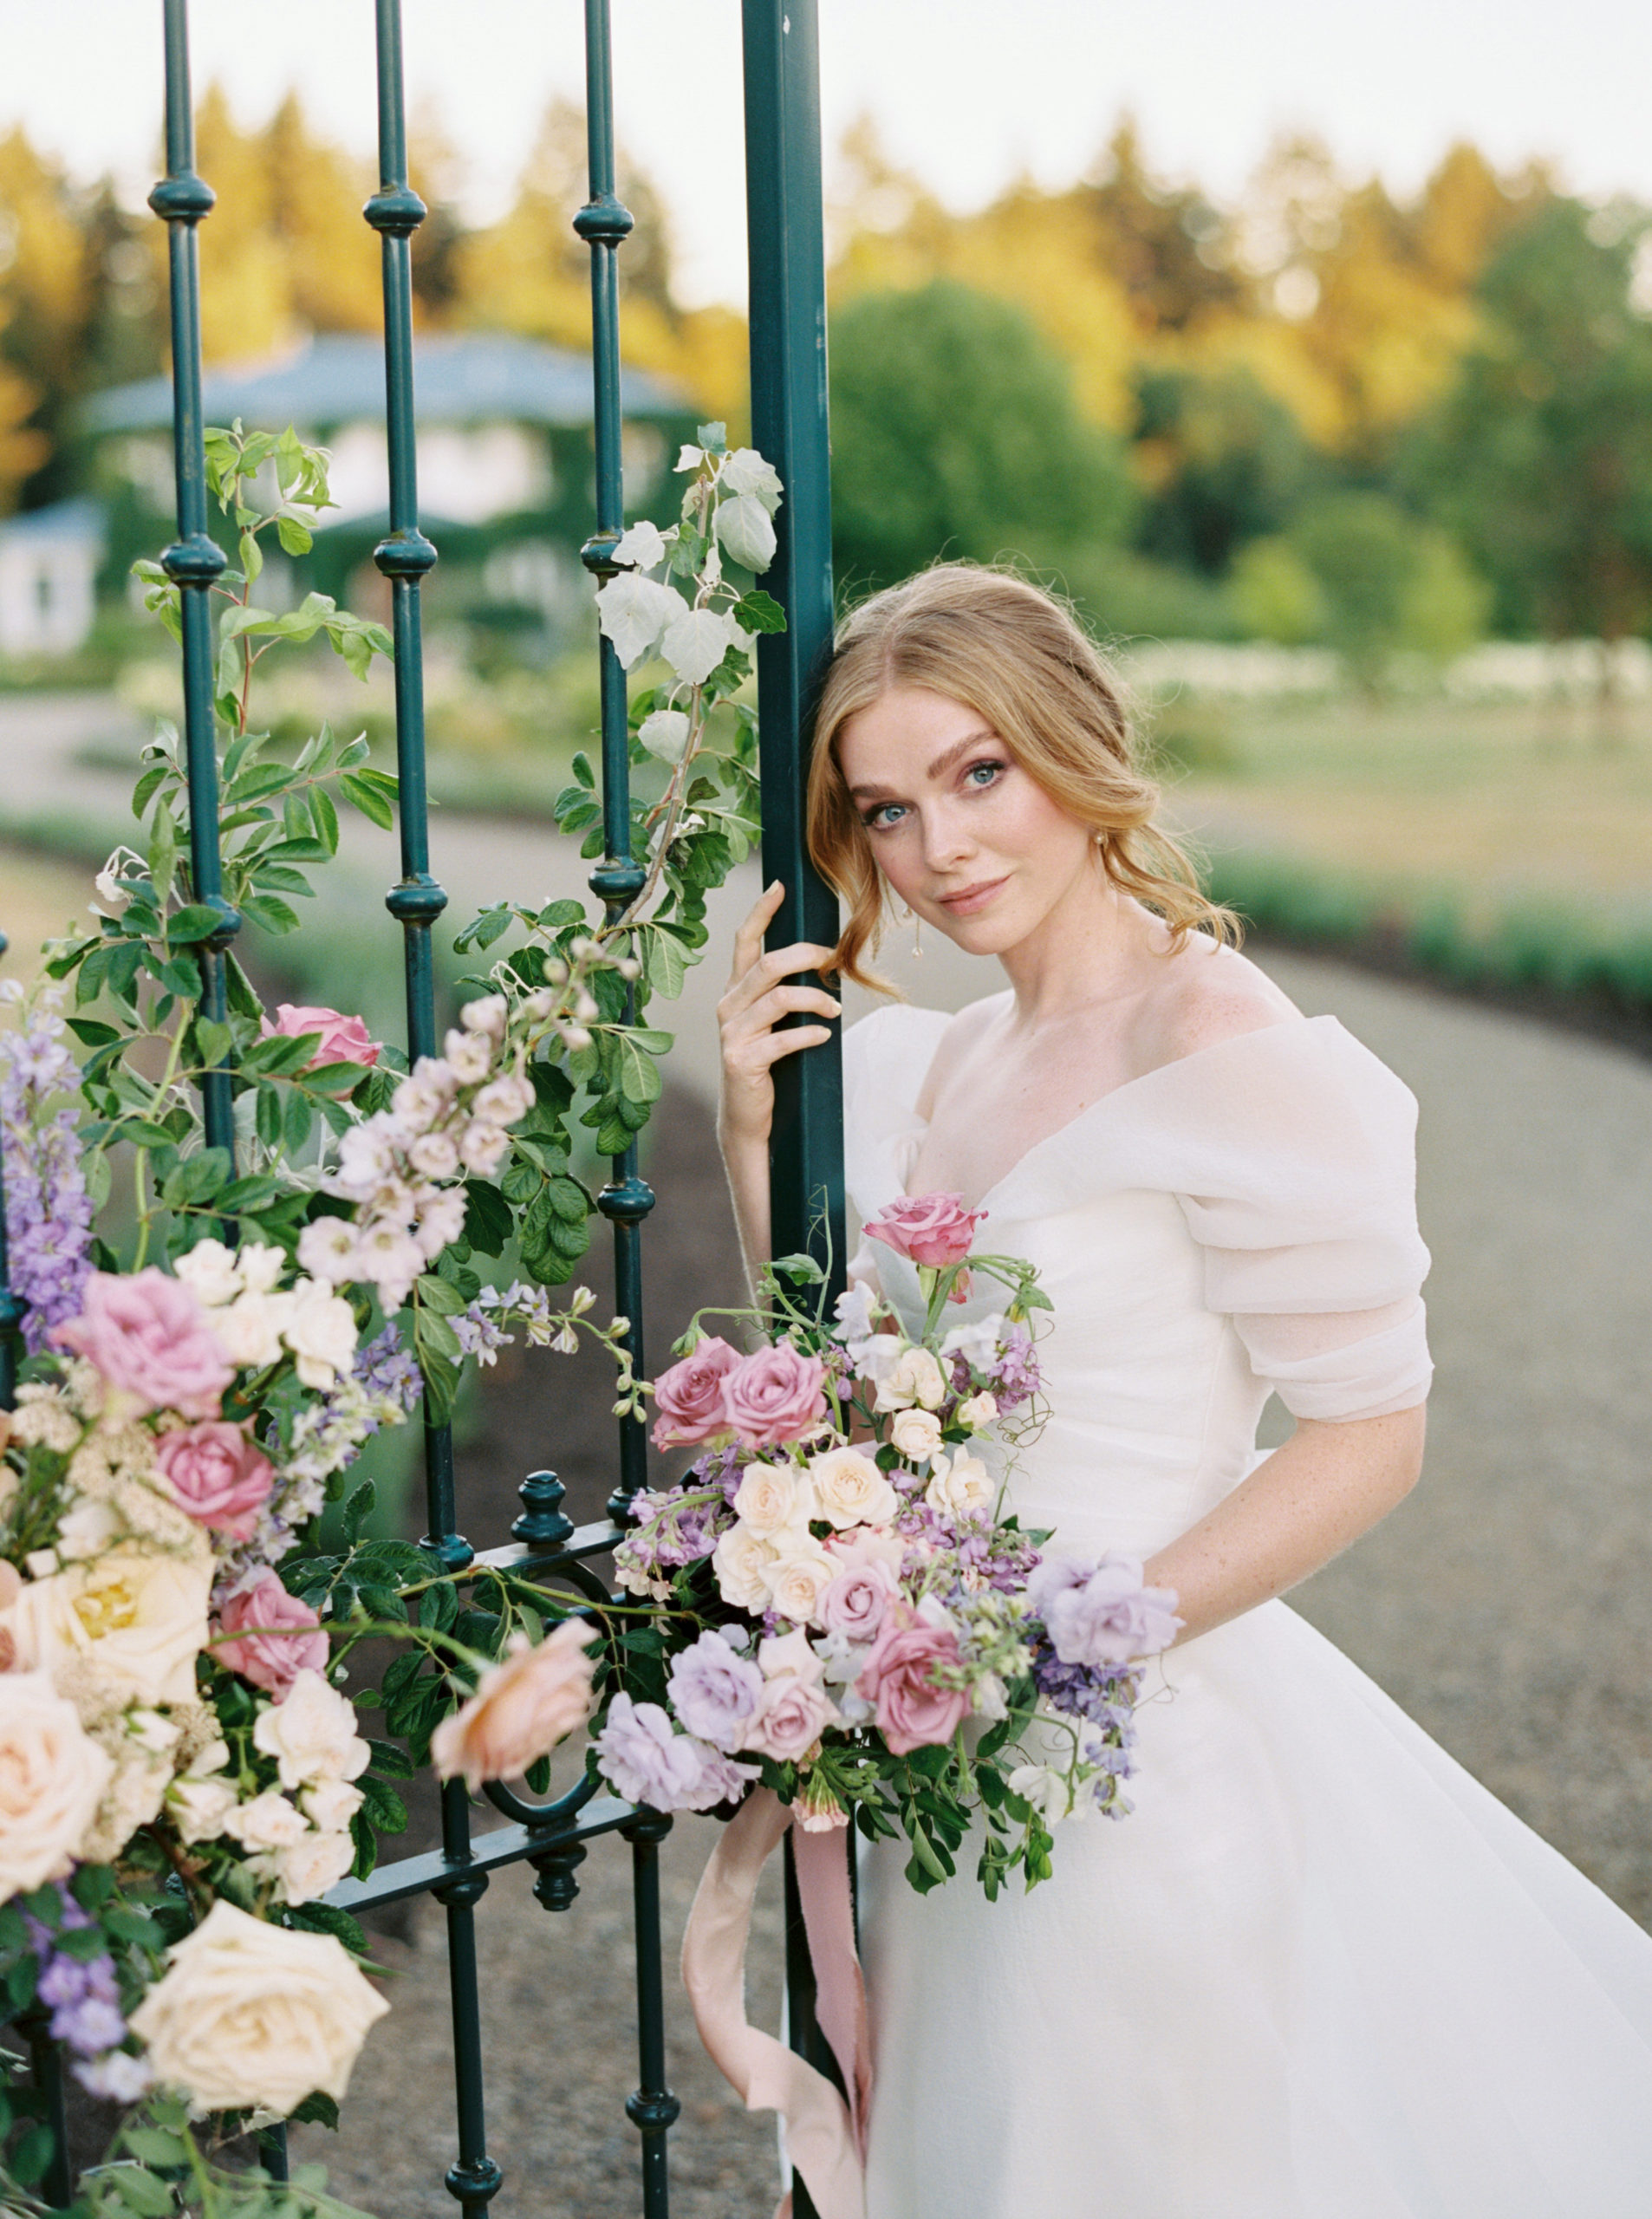 Monet Gardens Estate — Outdoor Winery Wedding in Washington